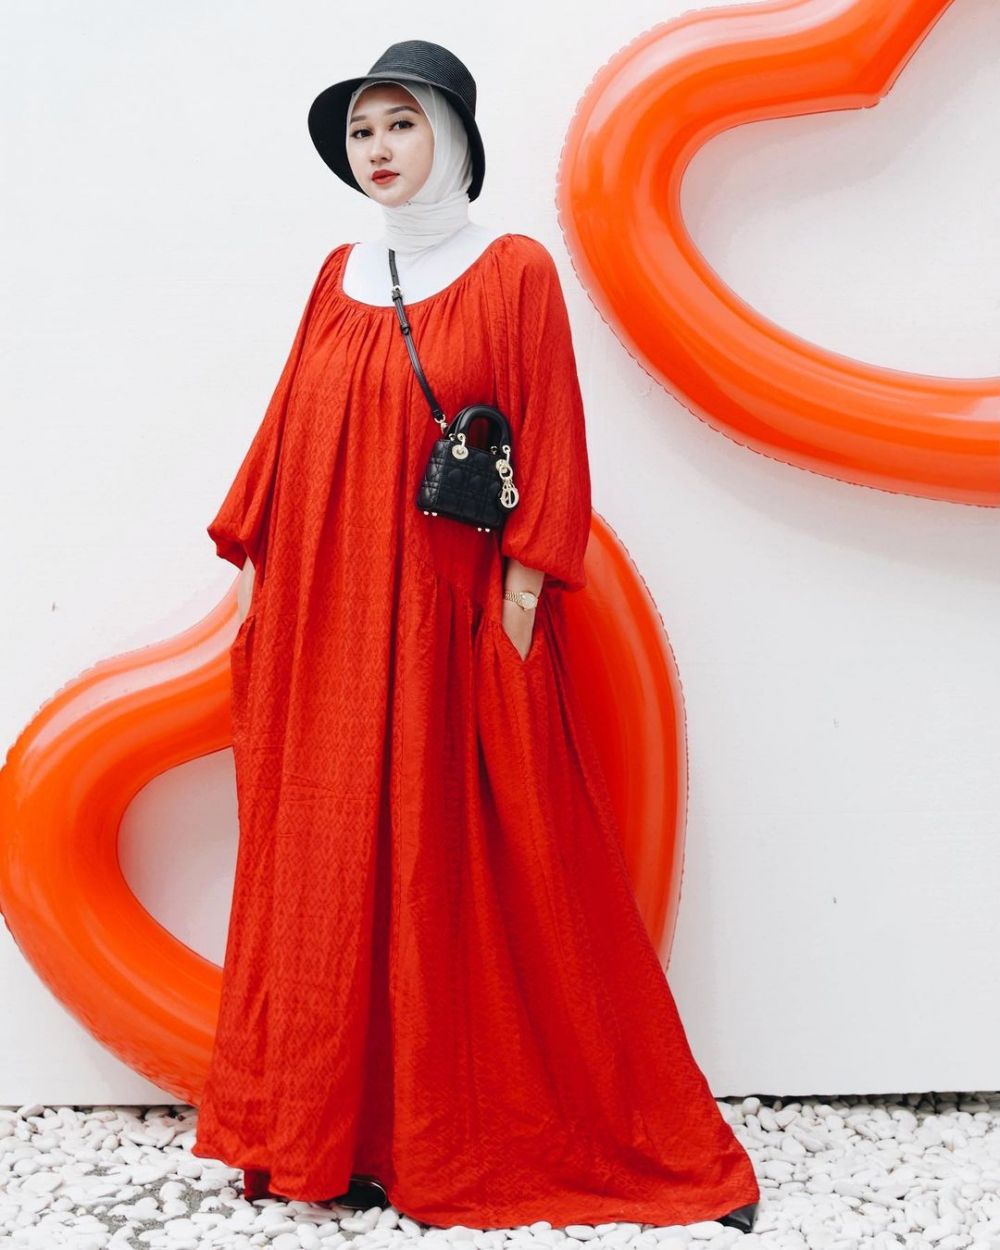 10 Potret Artis Berhijab Kenakan Gaun Merah, Memukau Bak Superstar!